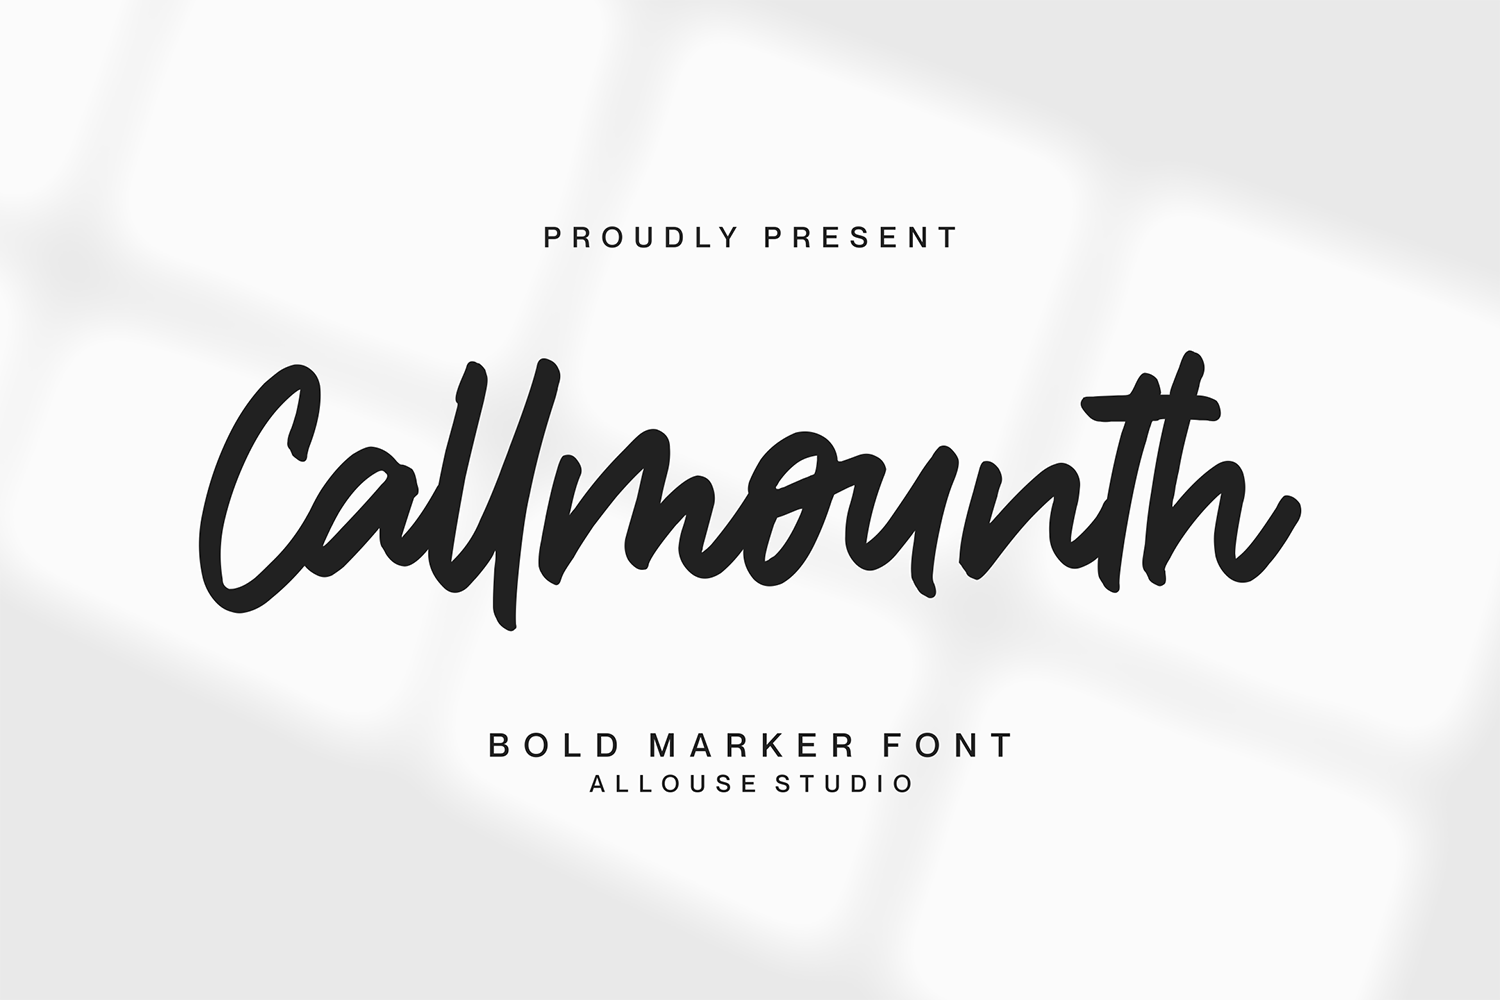 Callmounth Free Font